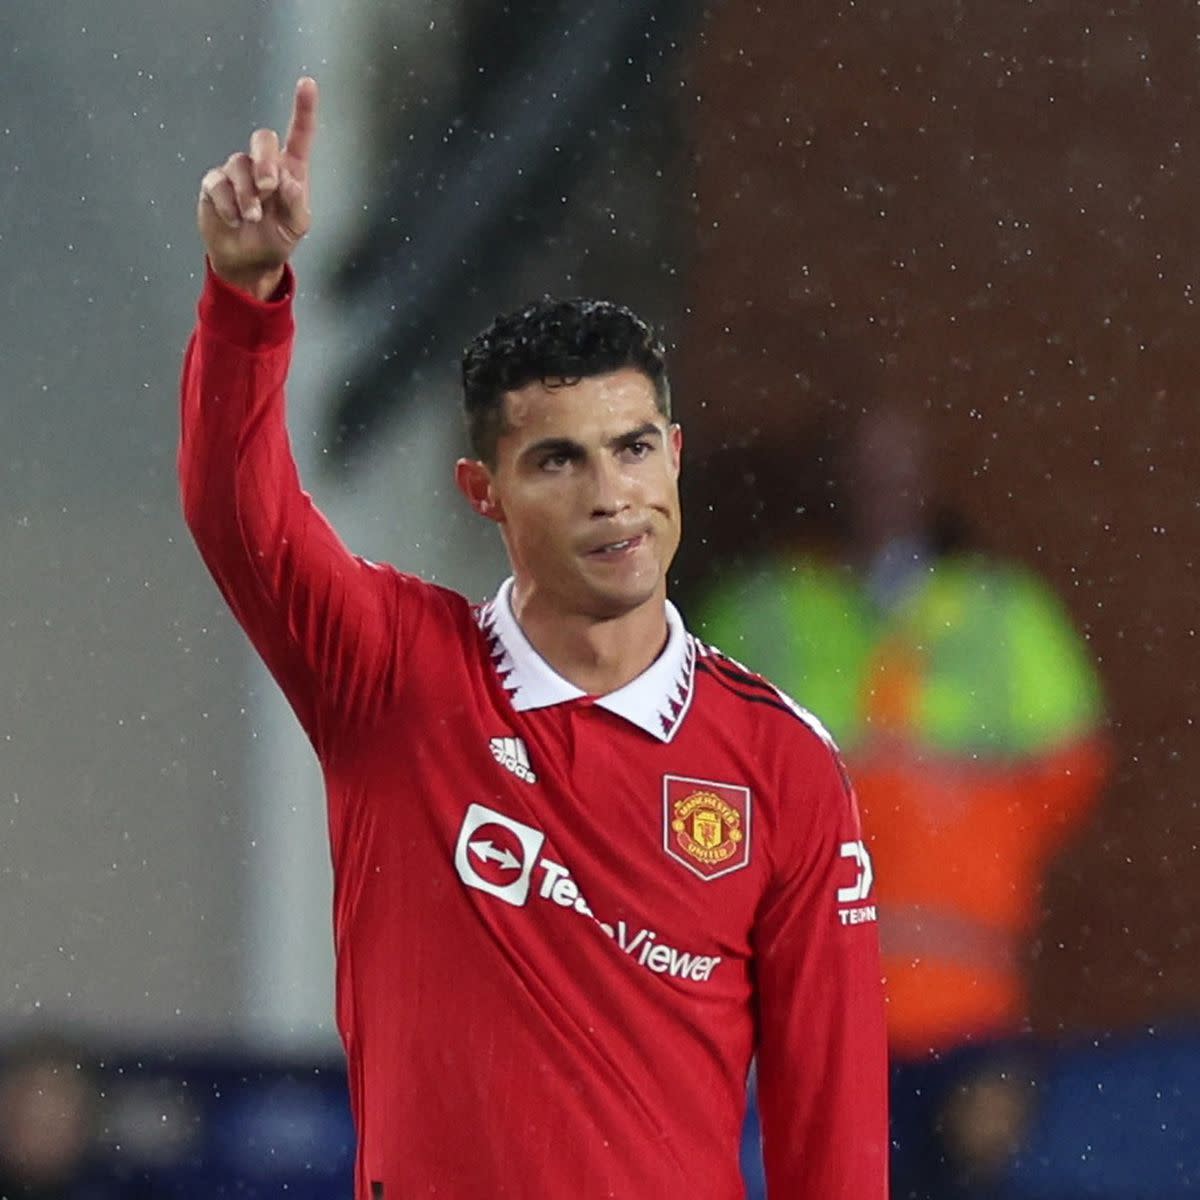 Cristiano Ronaldo Scored His First Goal in the Premiere League This Season 22/23